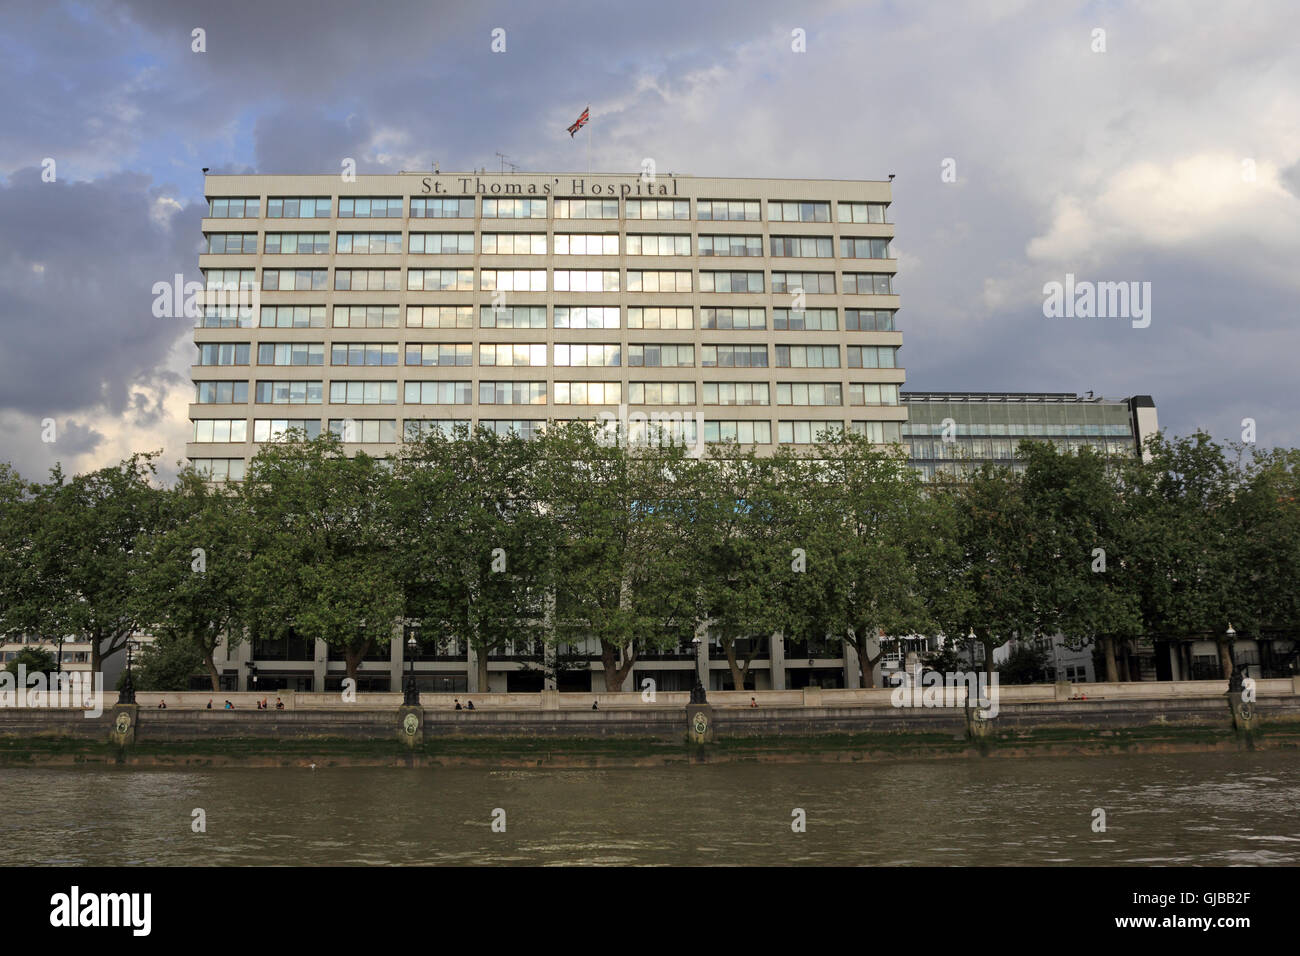 St. Thomas' Hospital Westminster Bridge Road, London SE1 7EH England UK Stockfoto